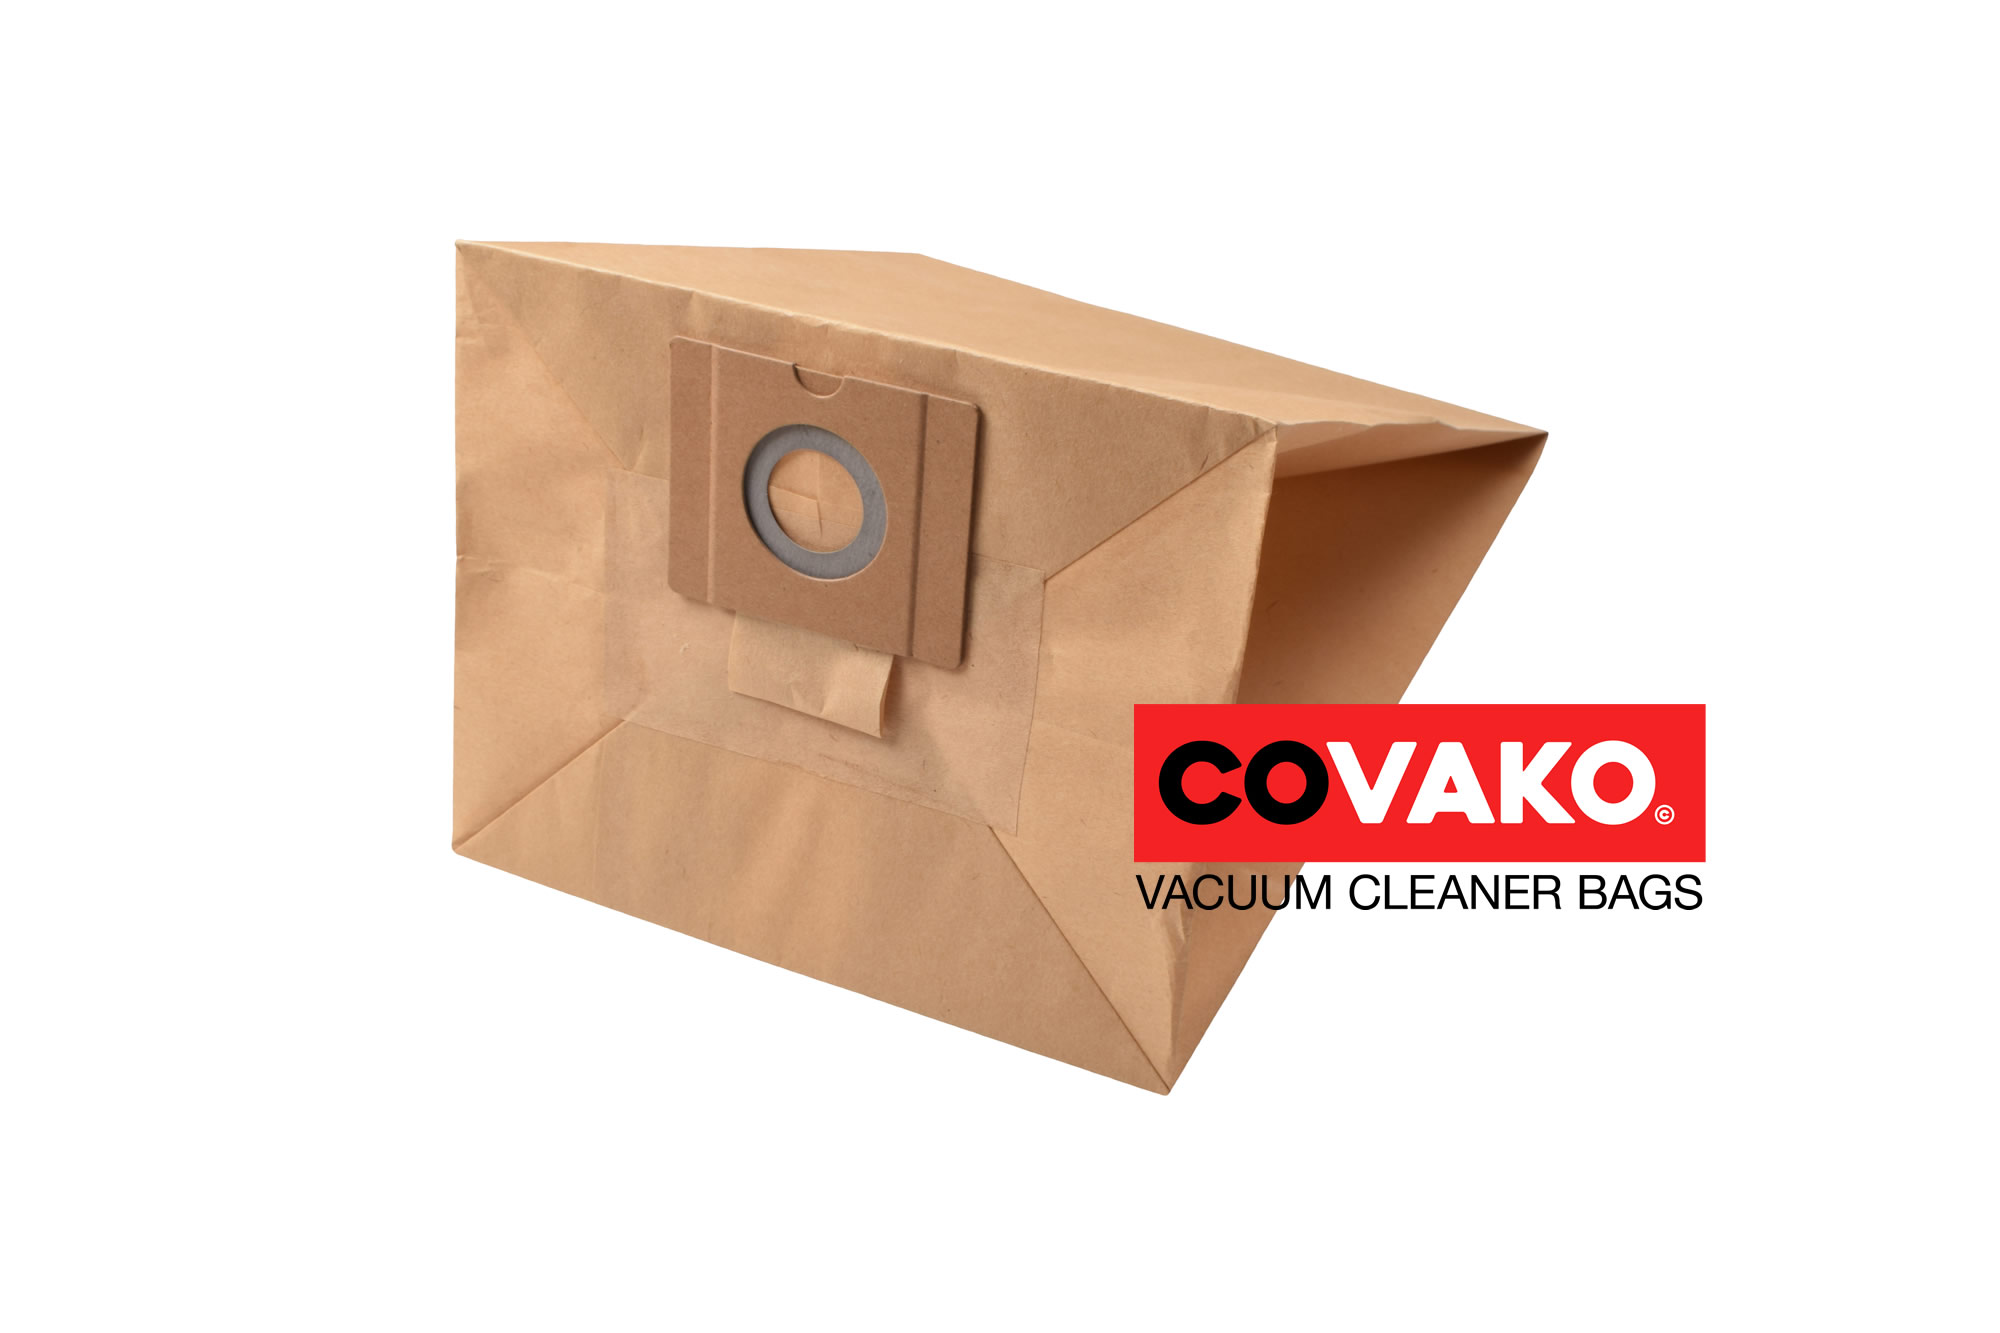 I-vac Cube plus / Paper - I-vac vacuum cleaner bags